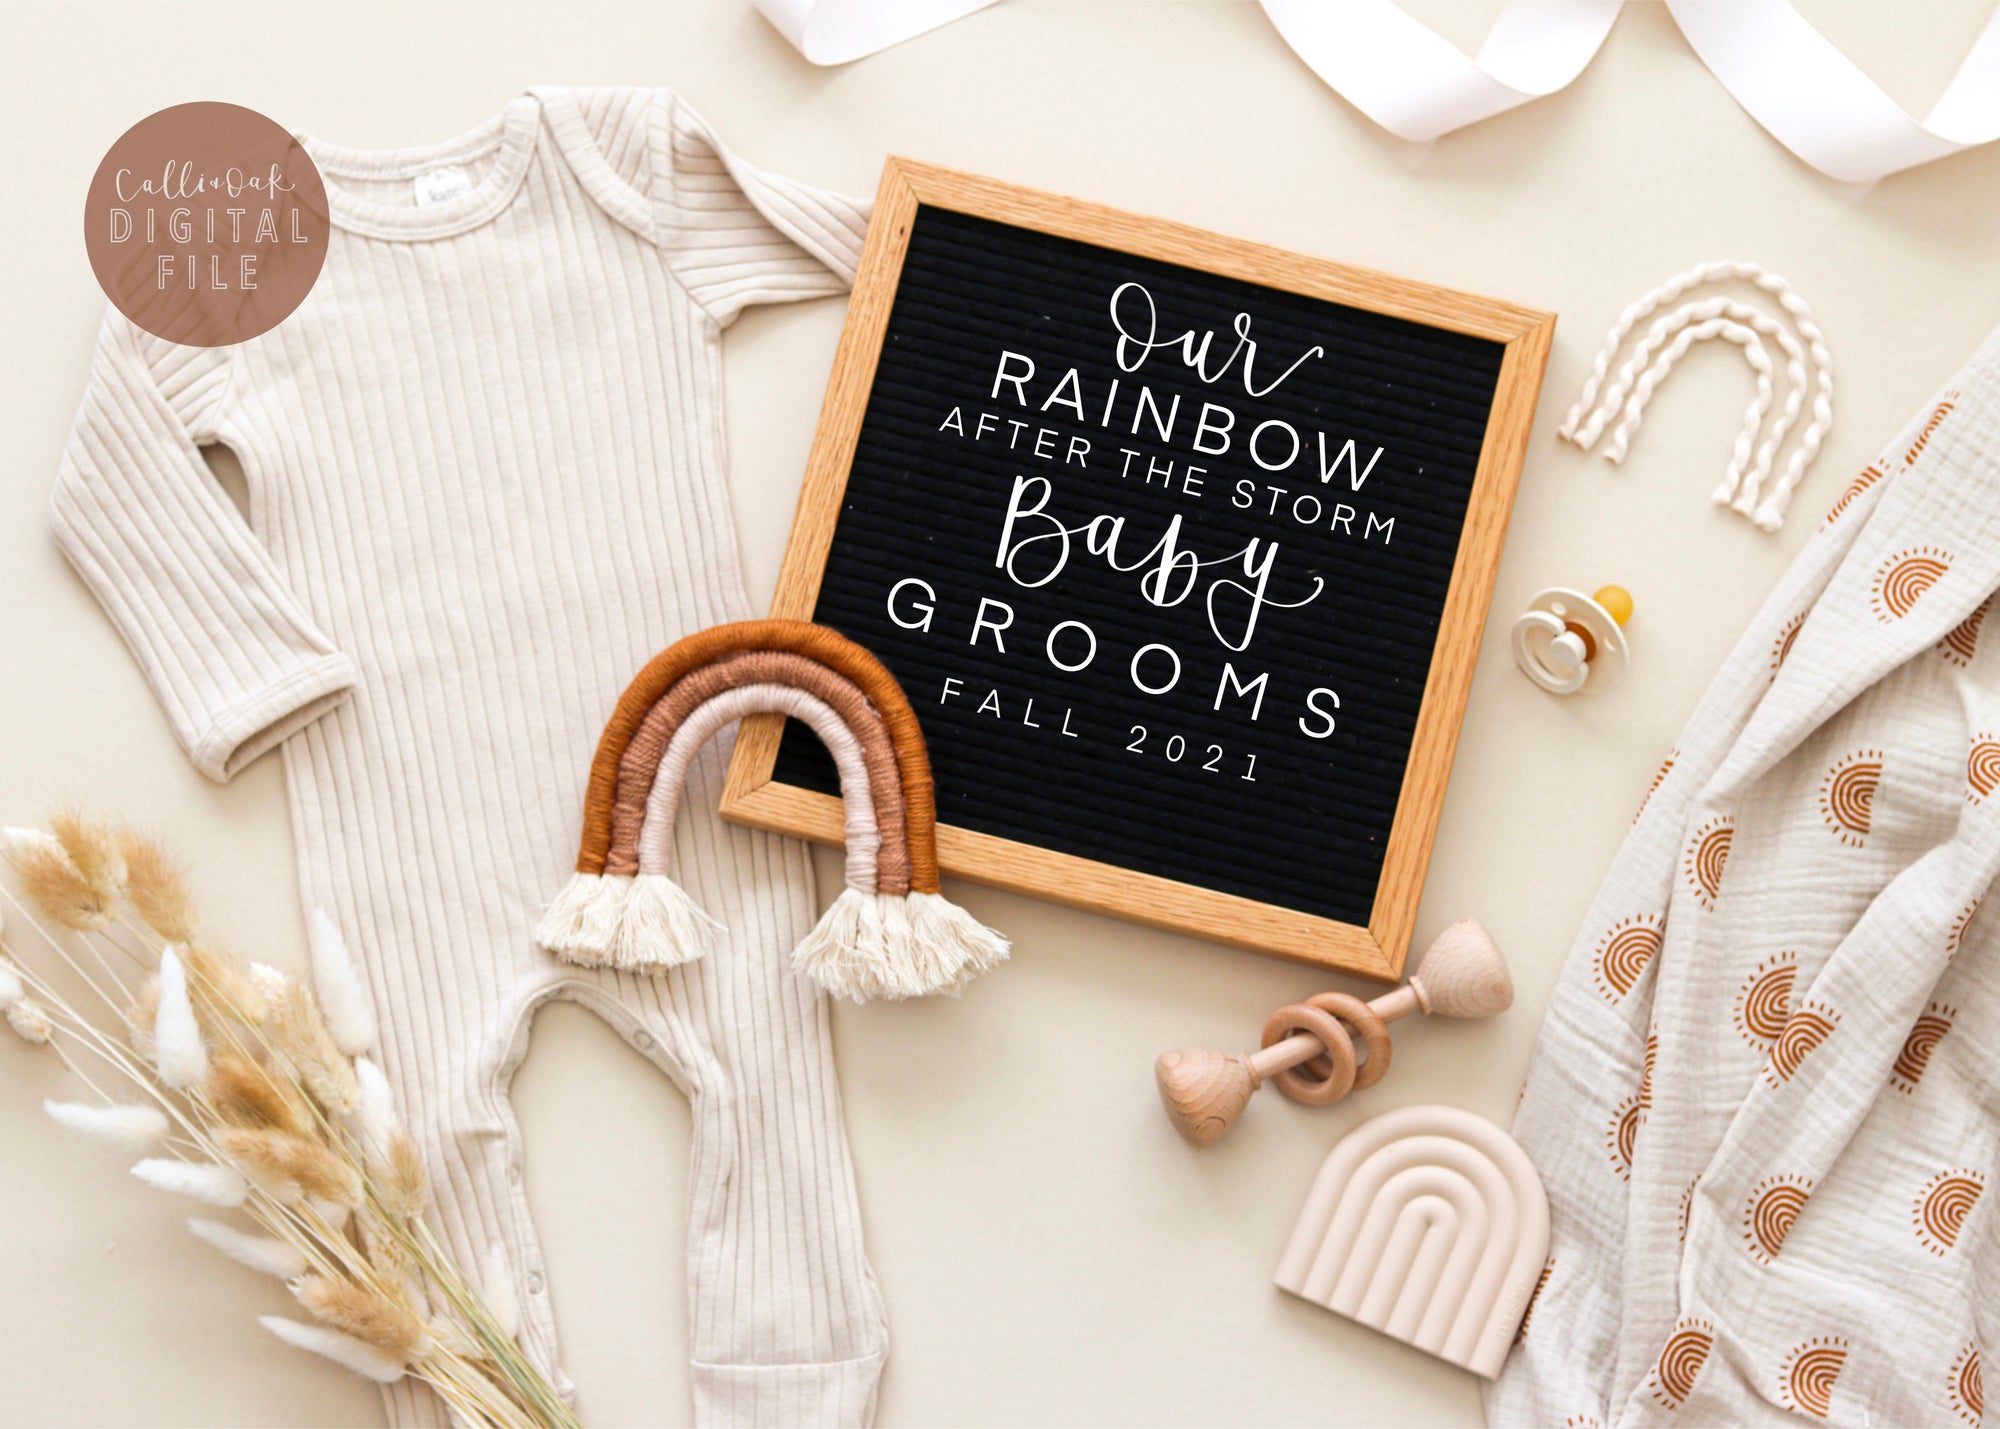 Rainbow Baby Baby vest Miracle Baby Newborn Baby Baby Shower Gift Pregnancy  Announcement Babygrow